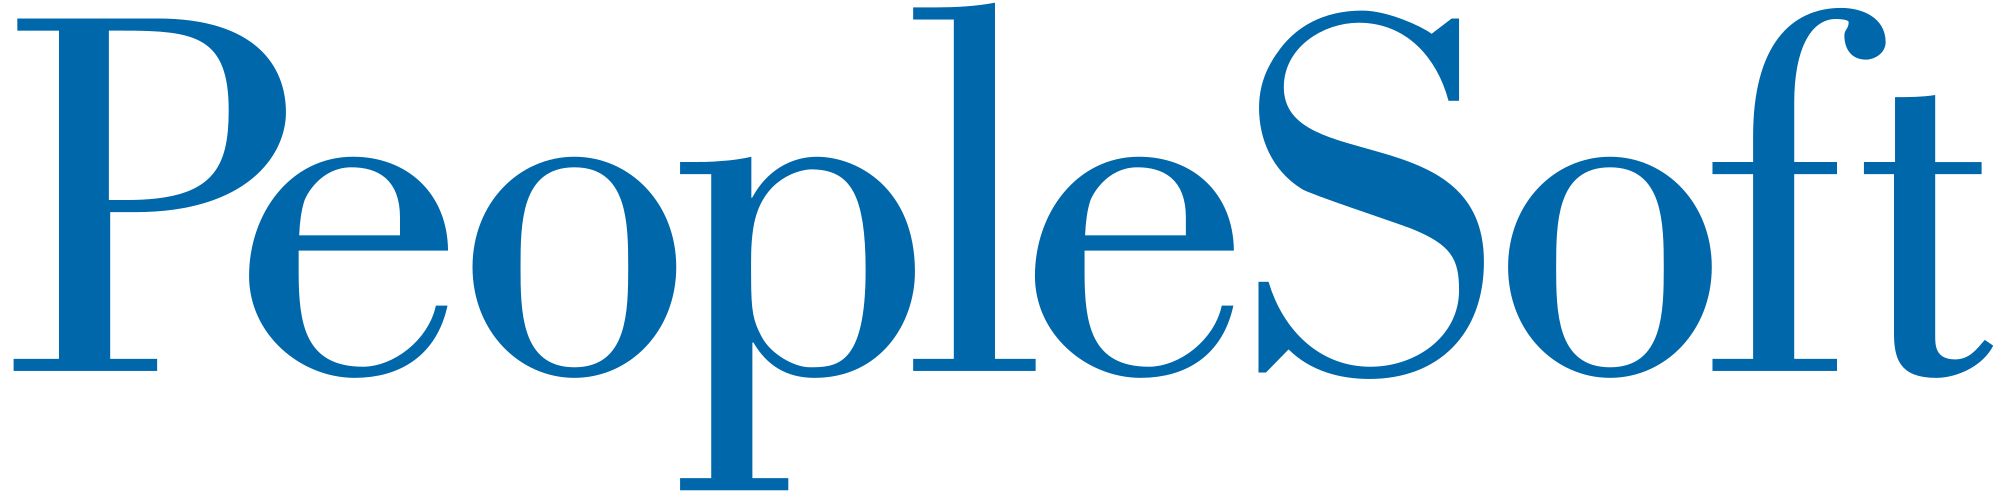 PeopleSoft Logo - File:PeopleSoft logo.svg - Wikimedia Commons